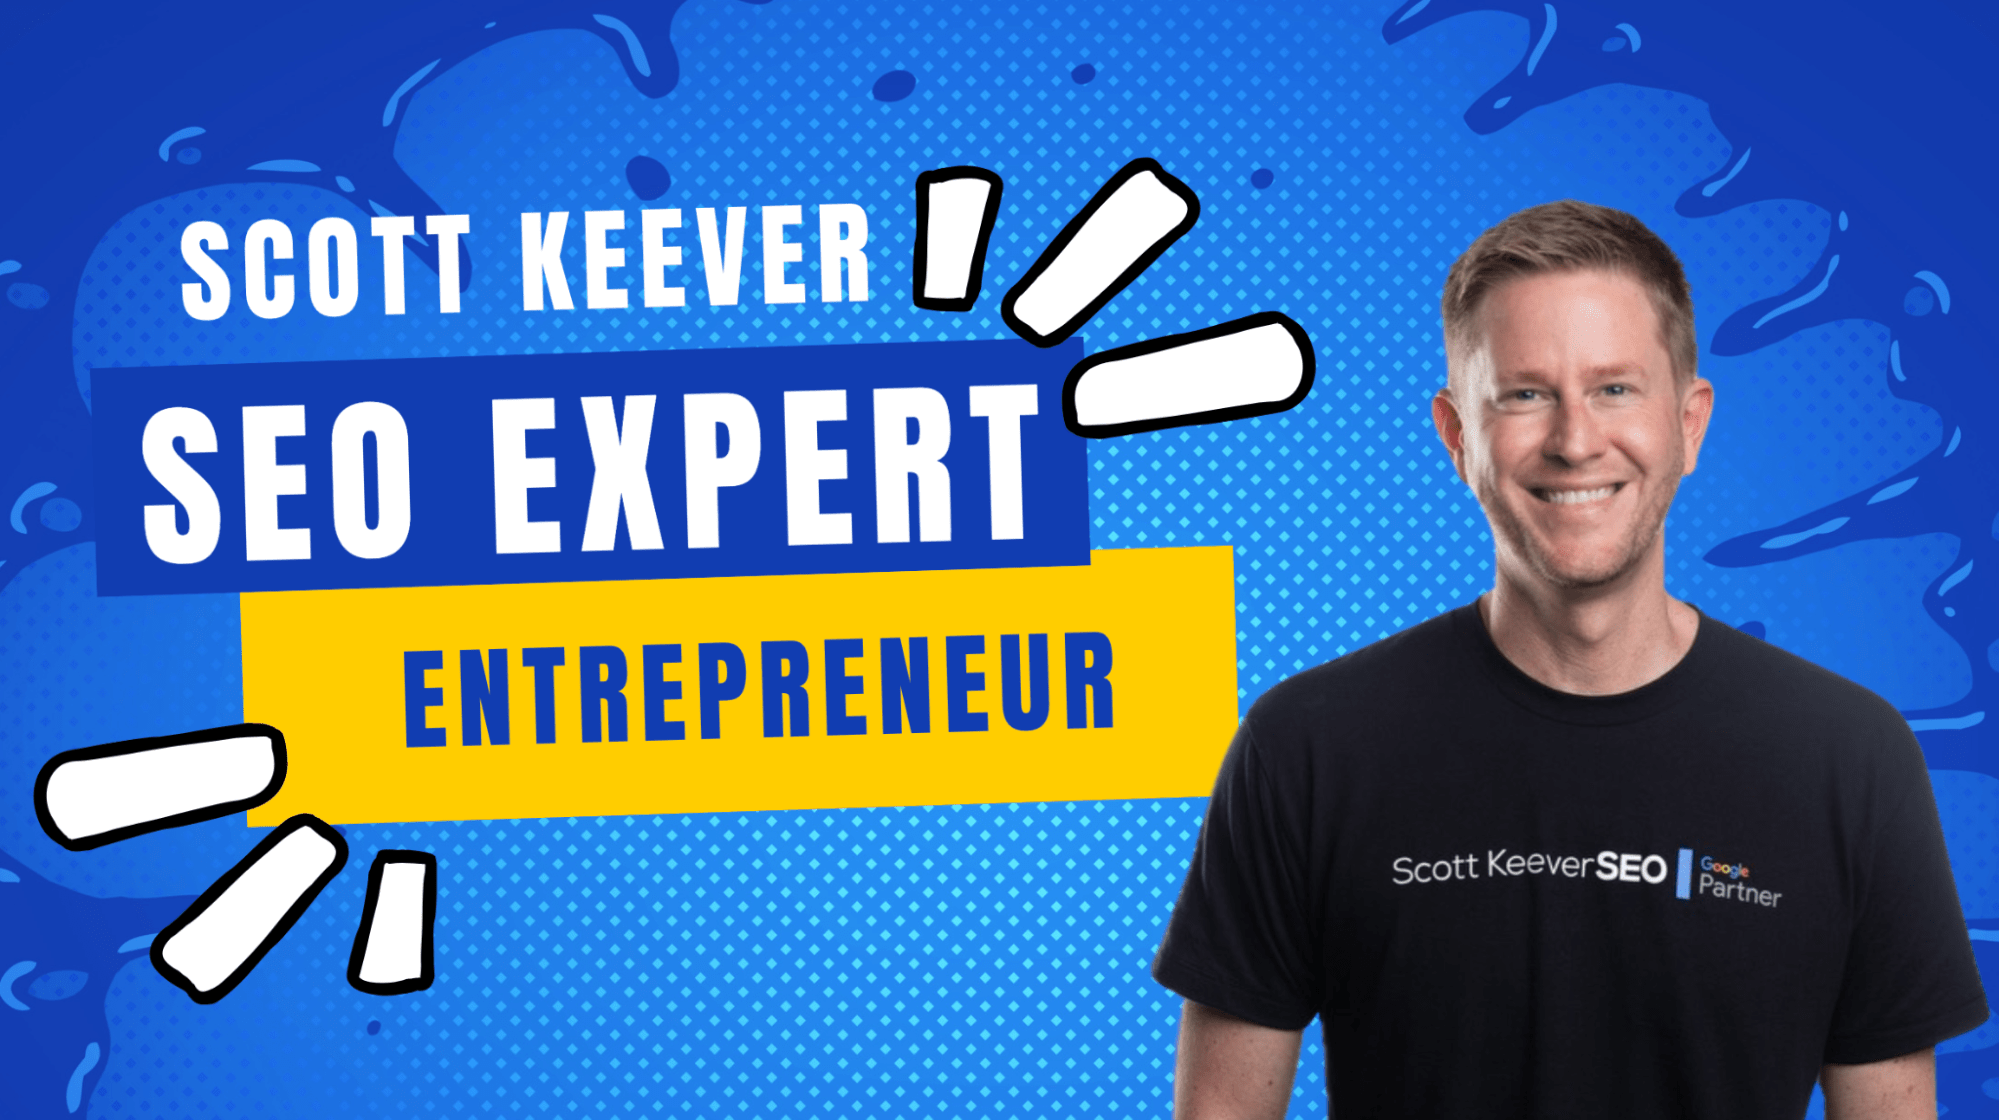 Entrepreneur Scott Keever Helps Businesses Improve Their Online Presence